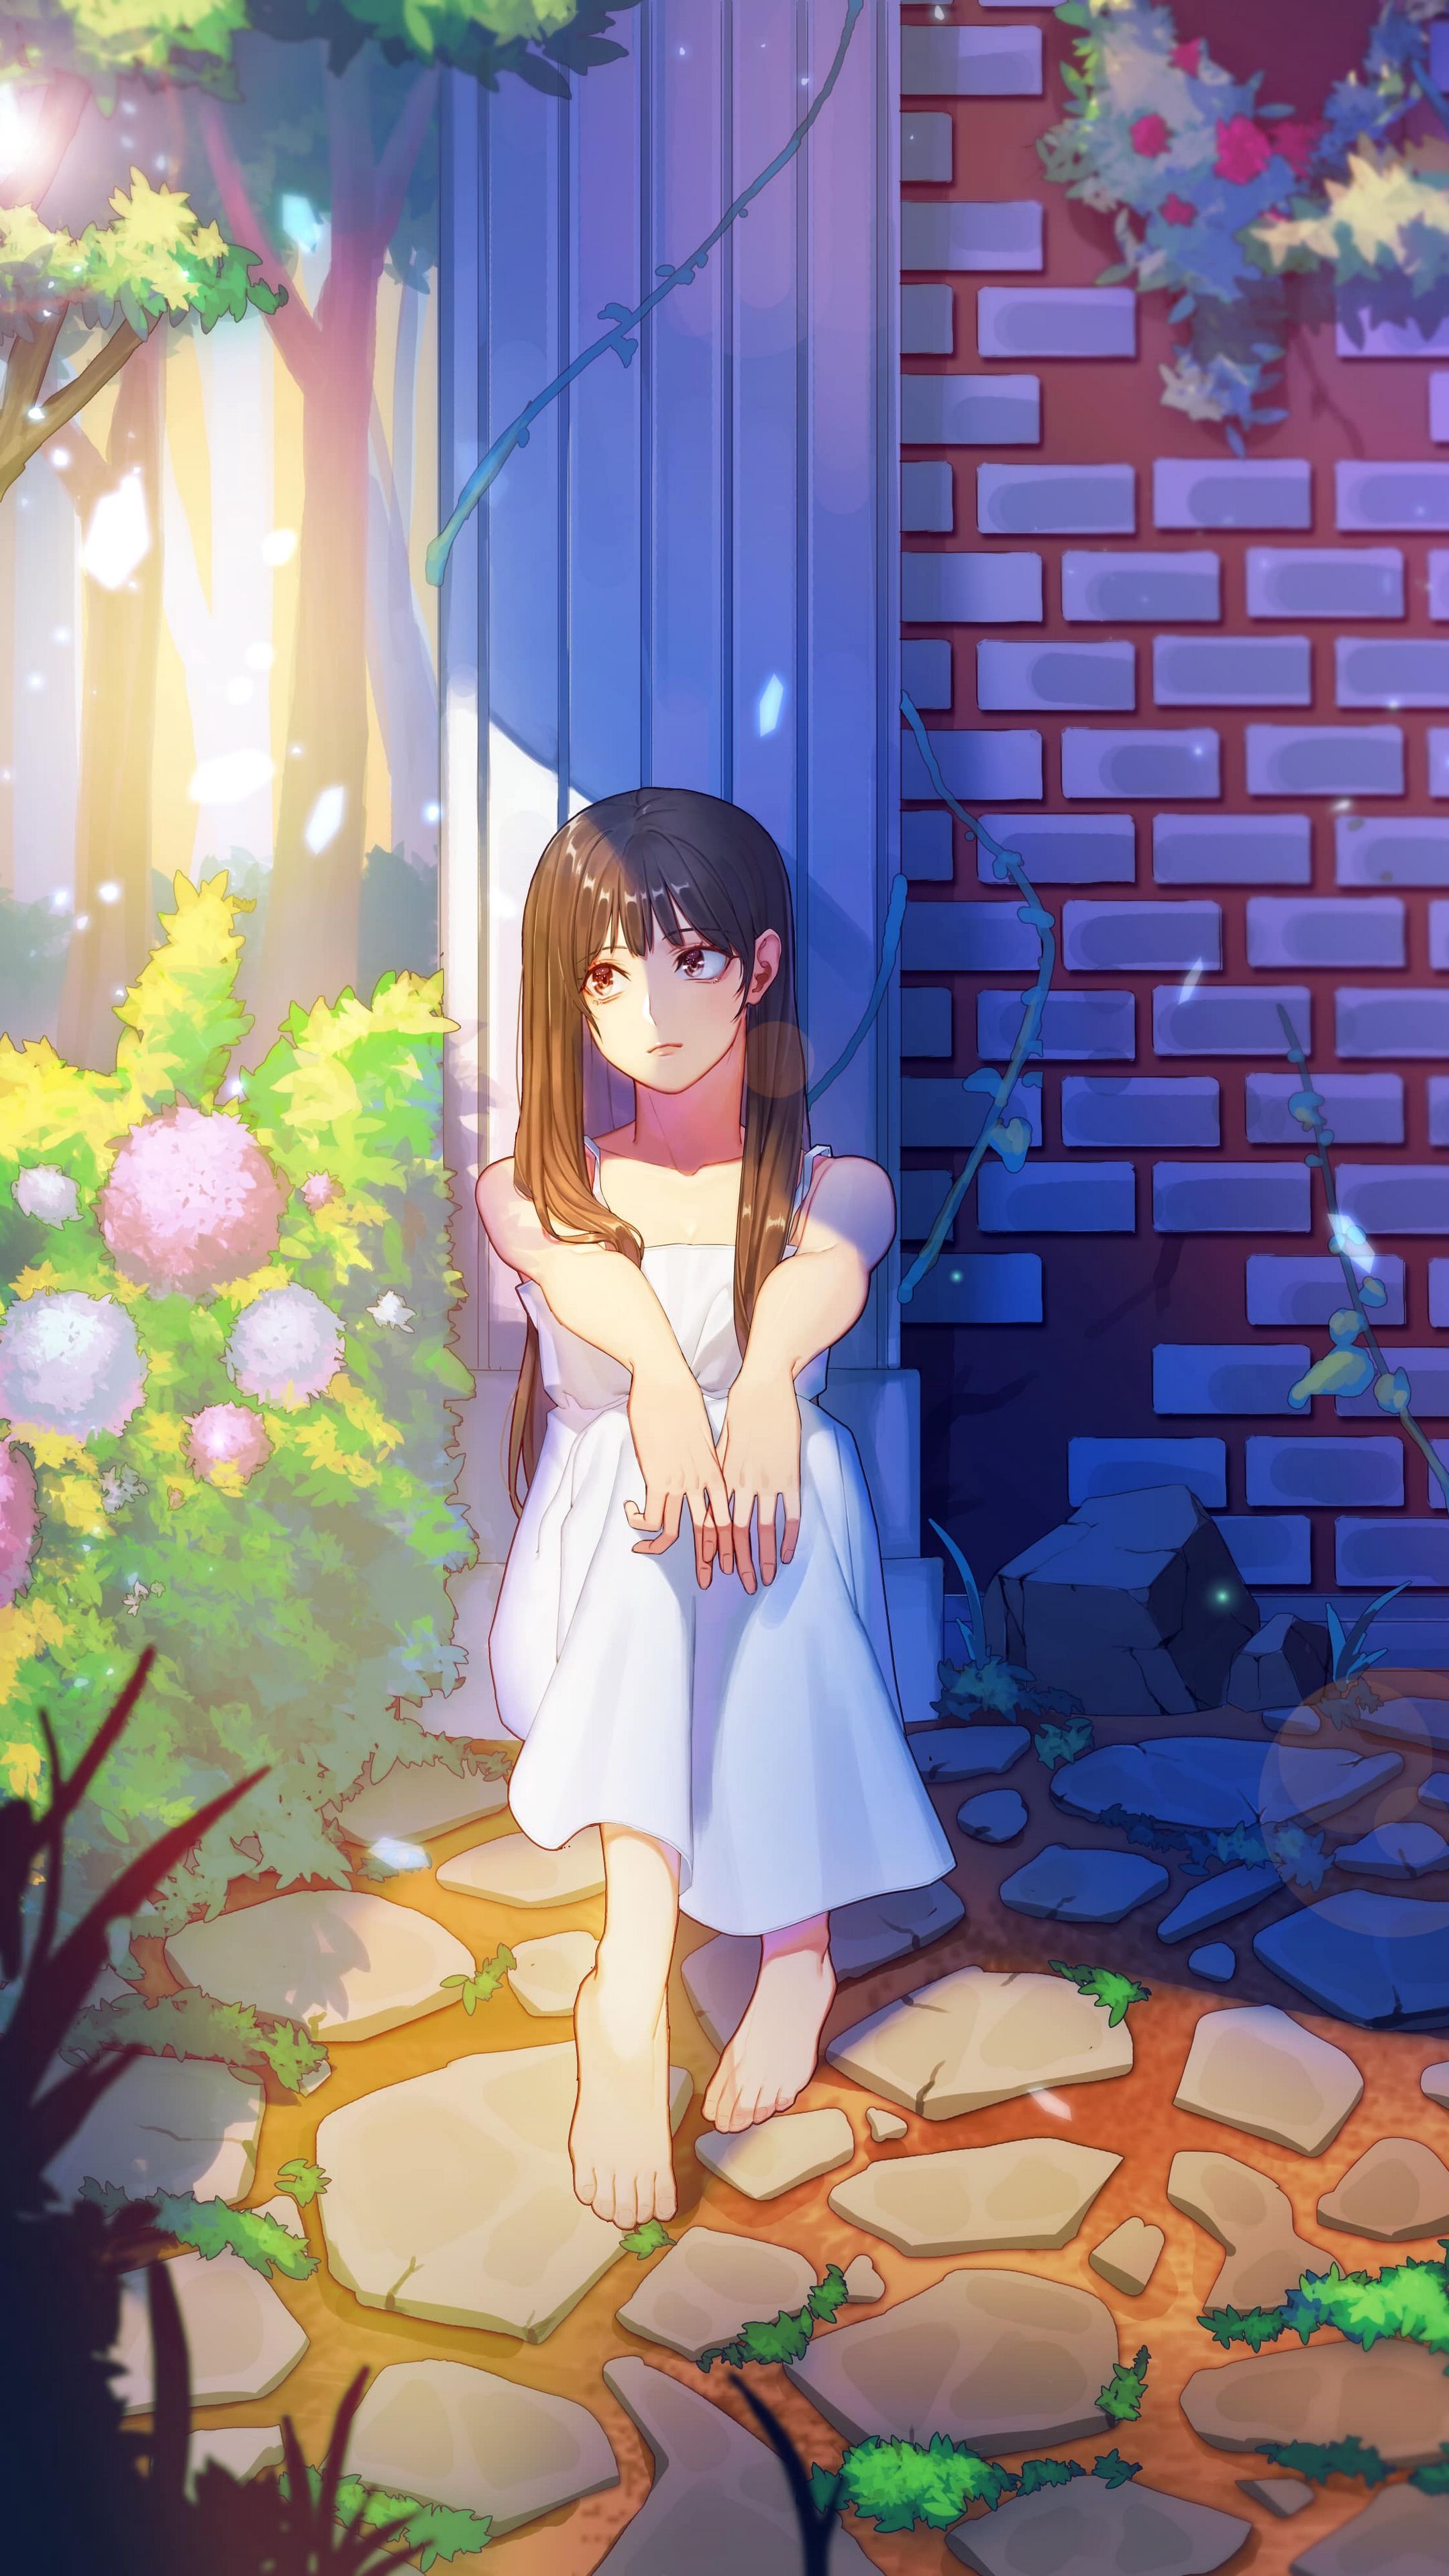 Top 162 + Anime garden background - Lestwinsonline.com